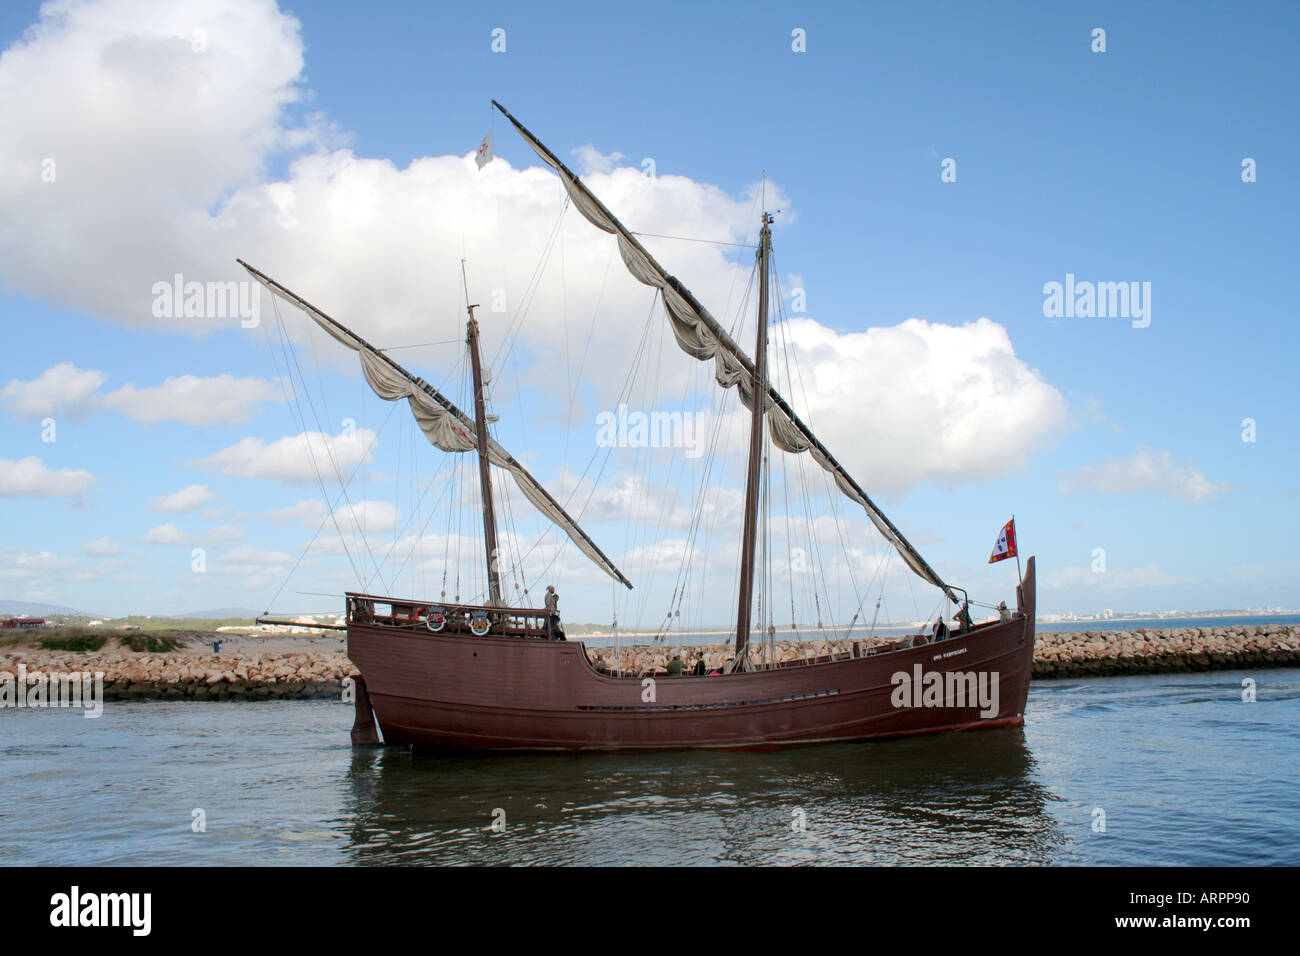 Lagos Hafen historisches Schiff Caravelo Boa Esperanca Algarve Portugal Stockfoto